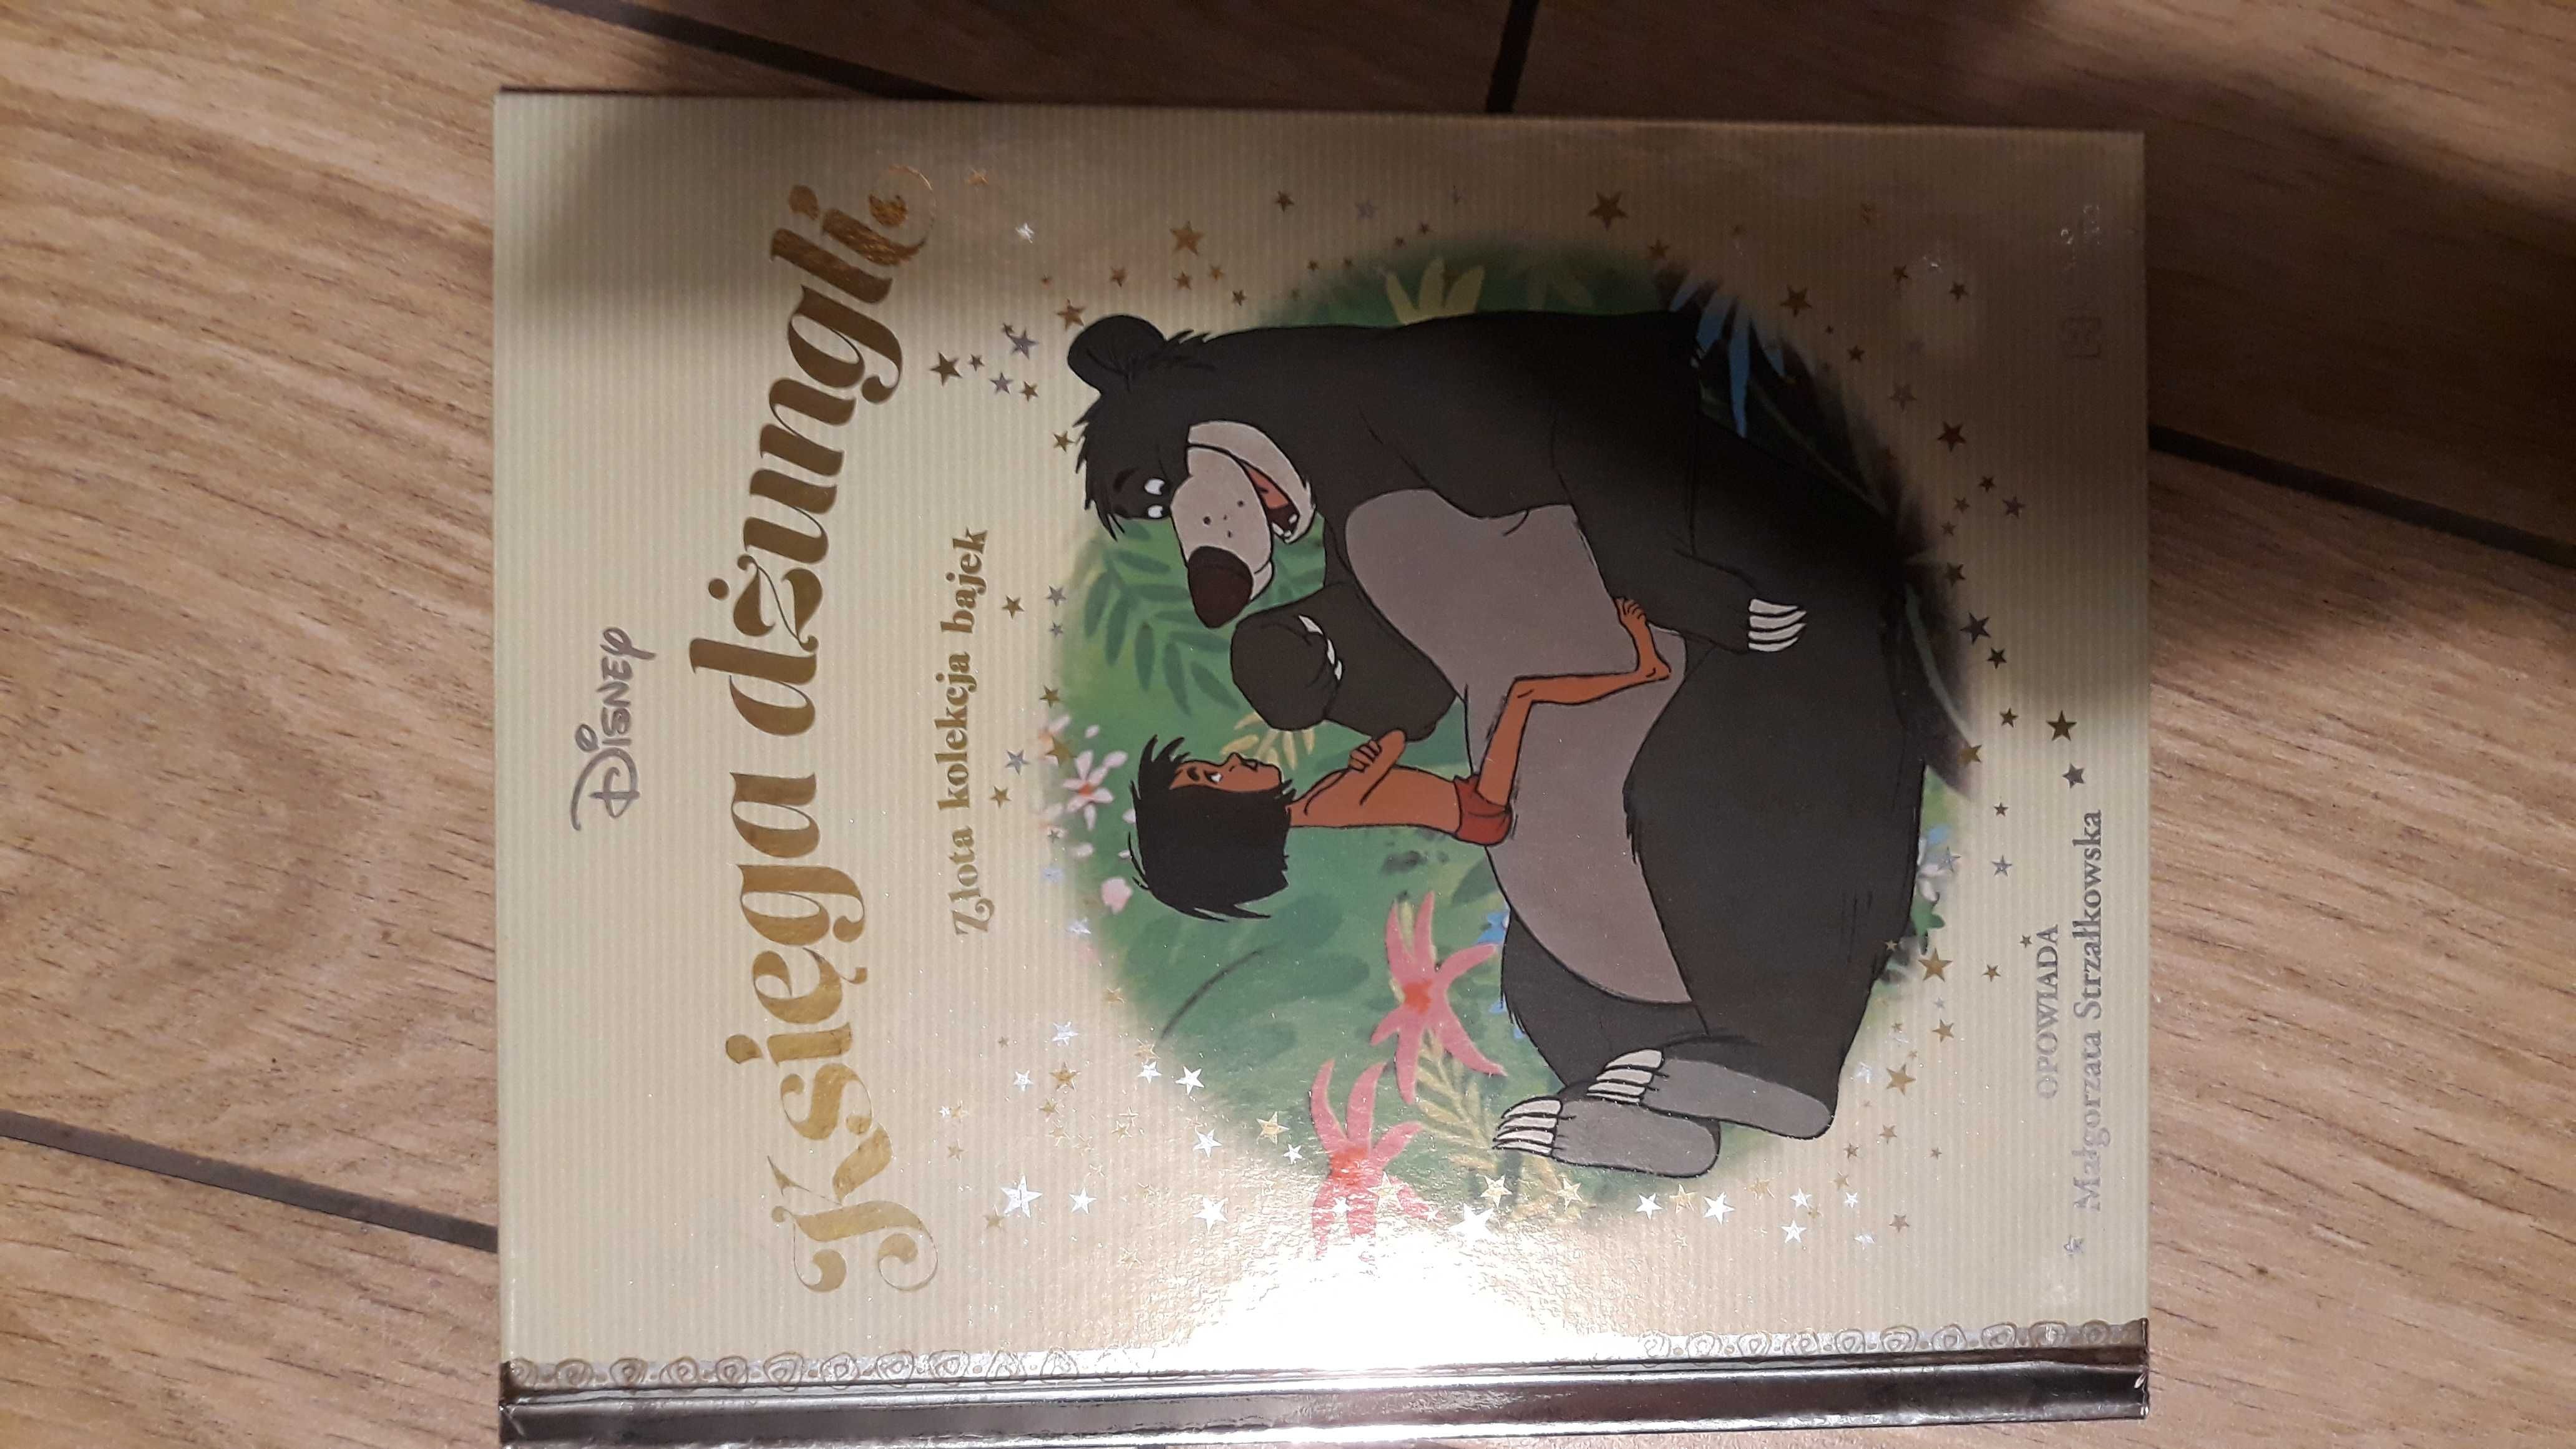 "Księga dżungli" (nr 9 z kolekcji Disneya hachette)